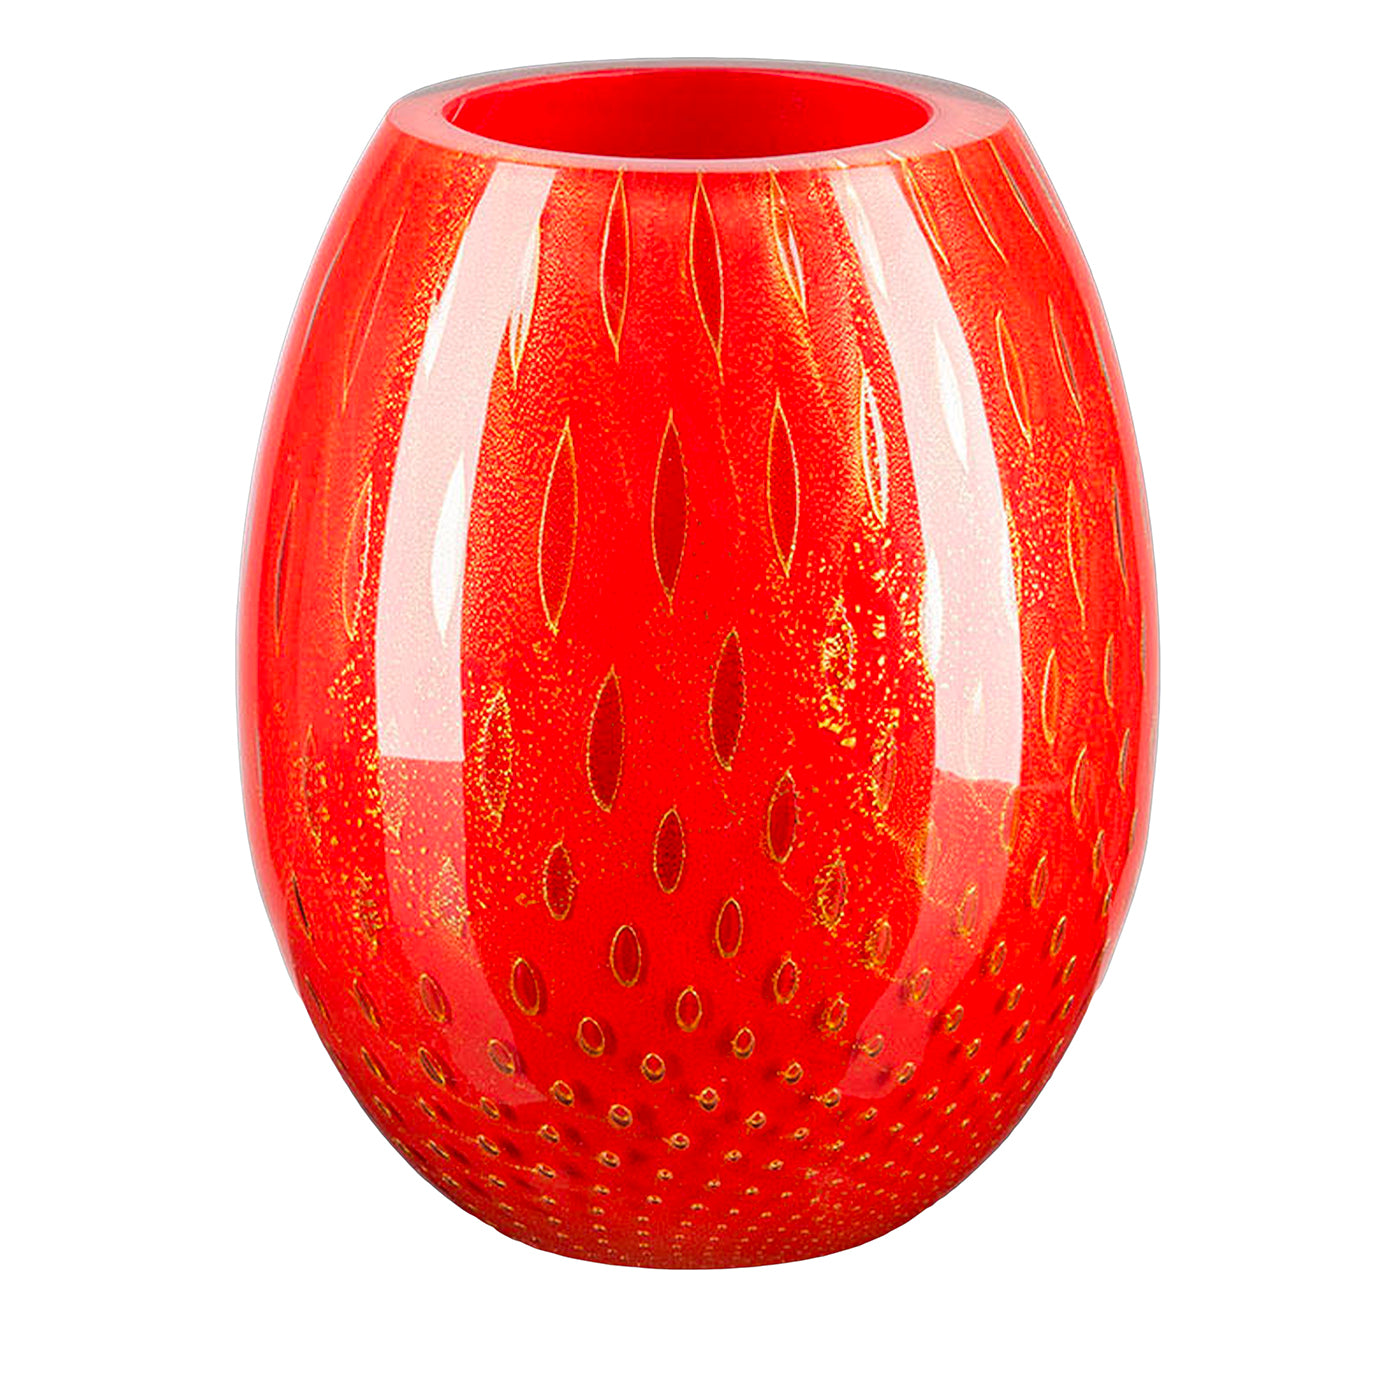 Mocenigo Oval Red Vase - Main view